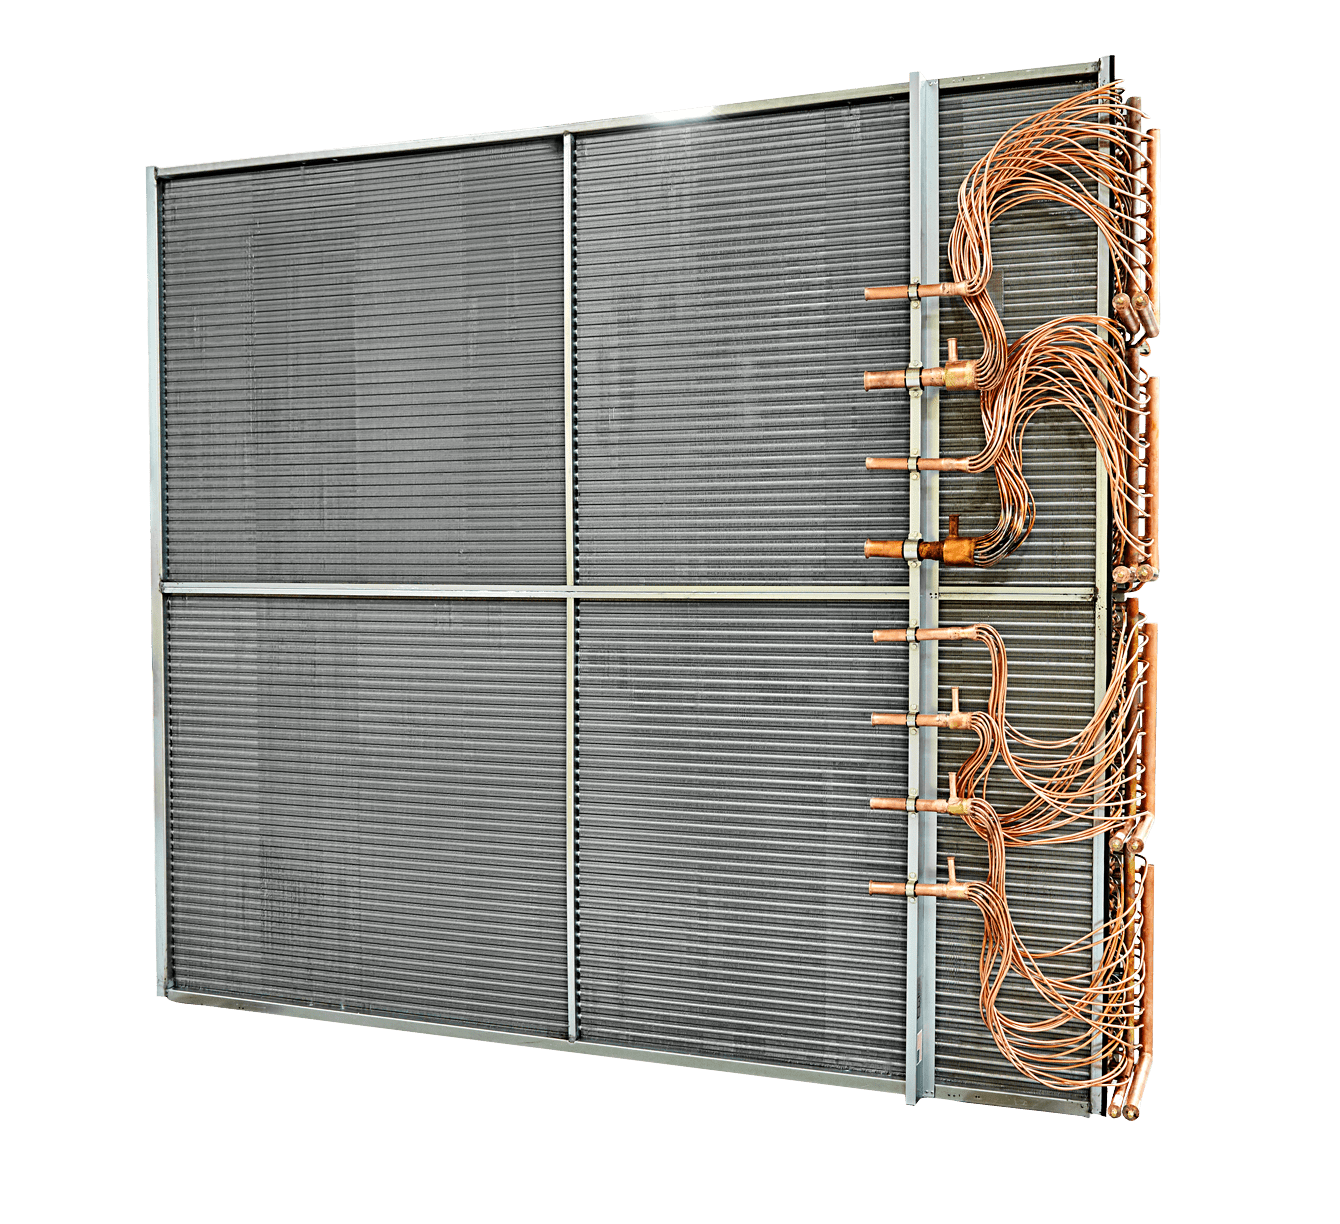 Evaporator_Data-Center-Cooling